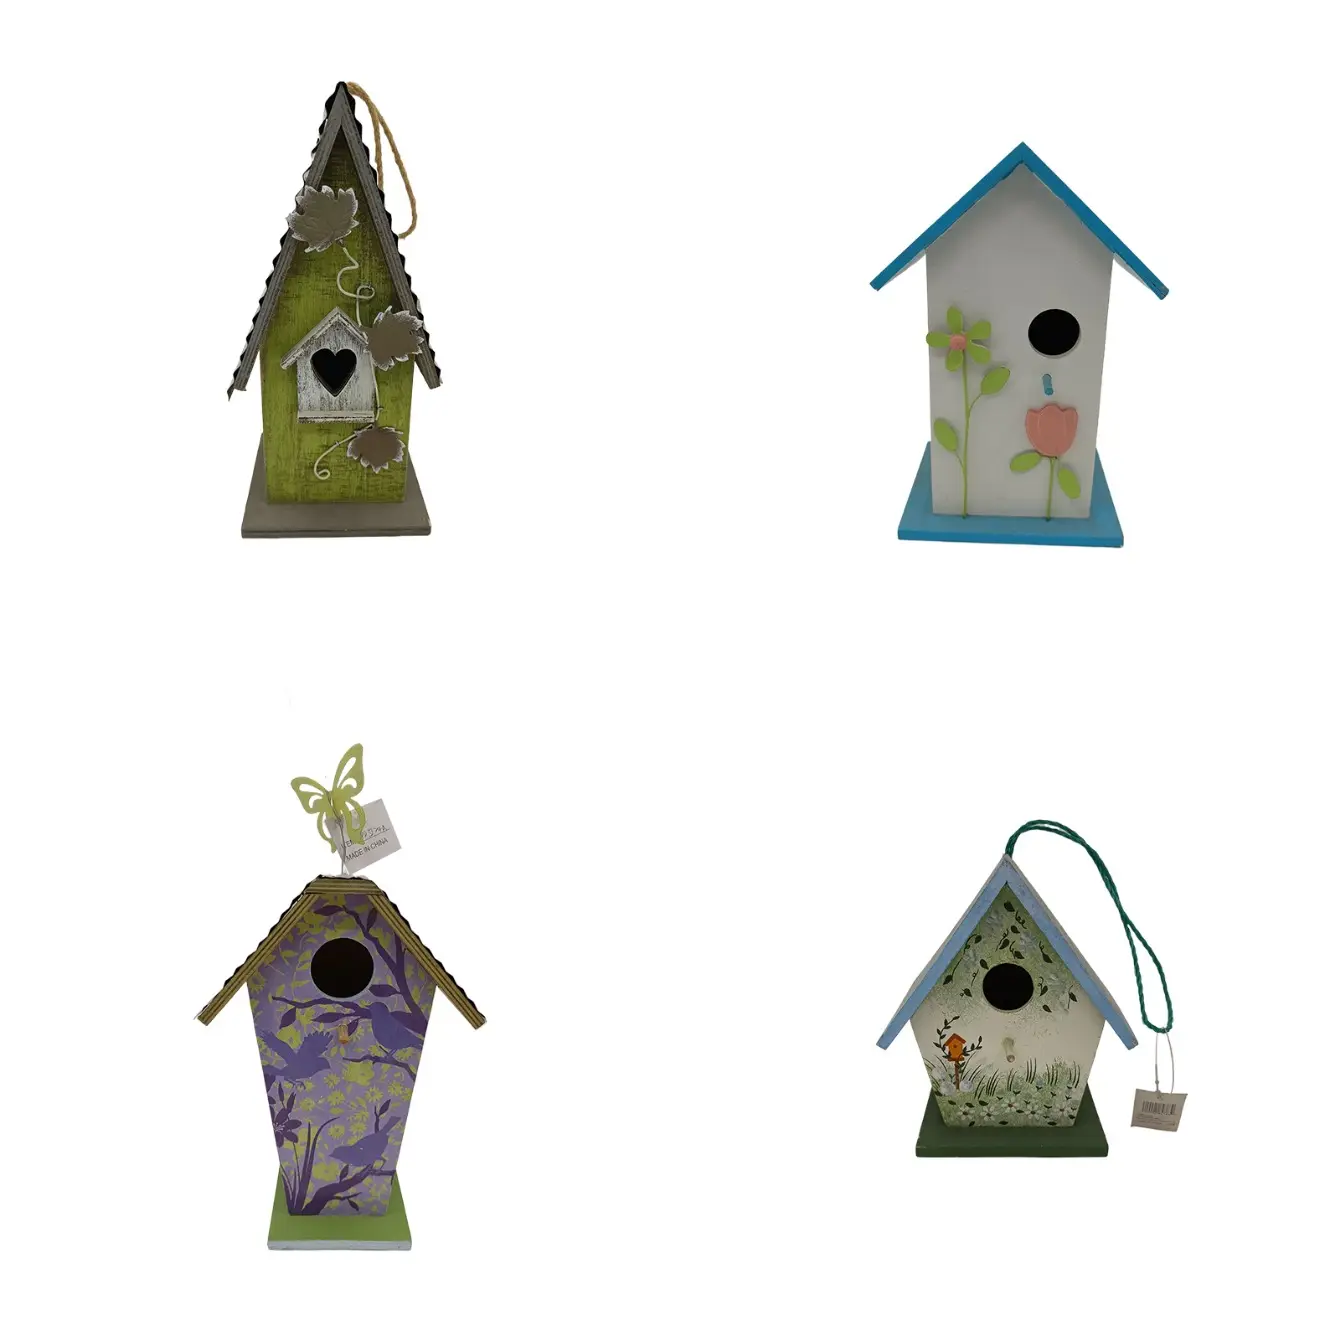 Al Aire Libre exterior jardín madera Natural casa decorativa forma pájaro loro jaula casas caja colgante pajareras nido